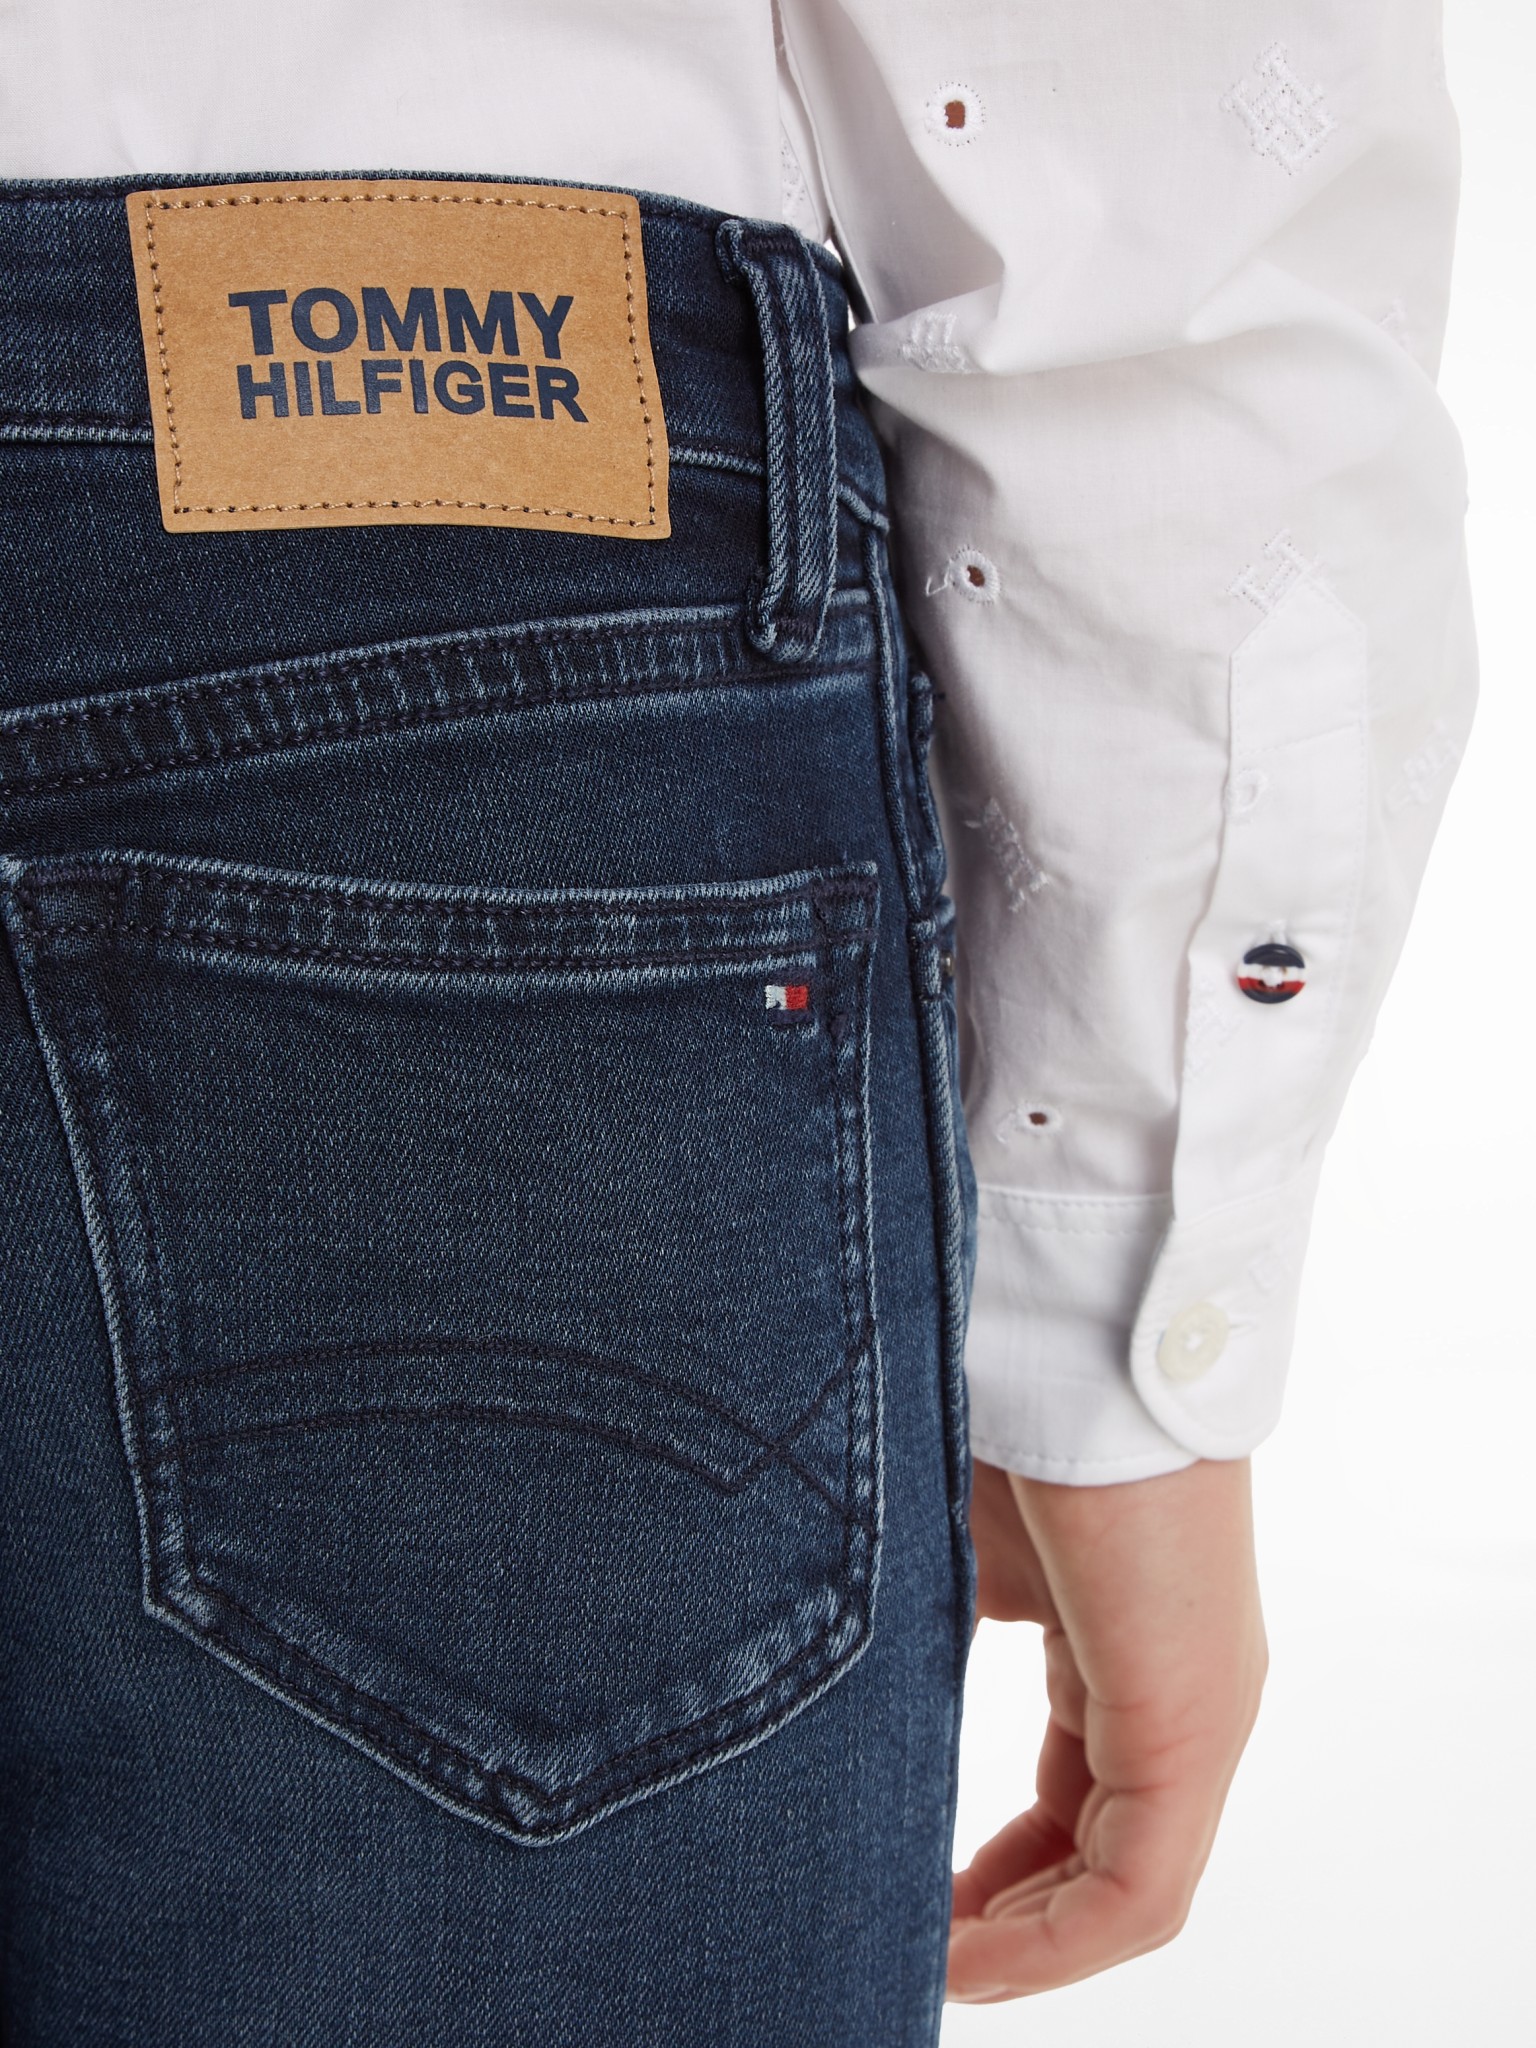 TOMMY HILFIGER Jeans 10704861